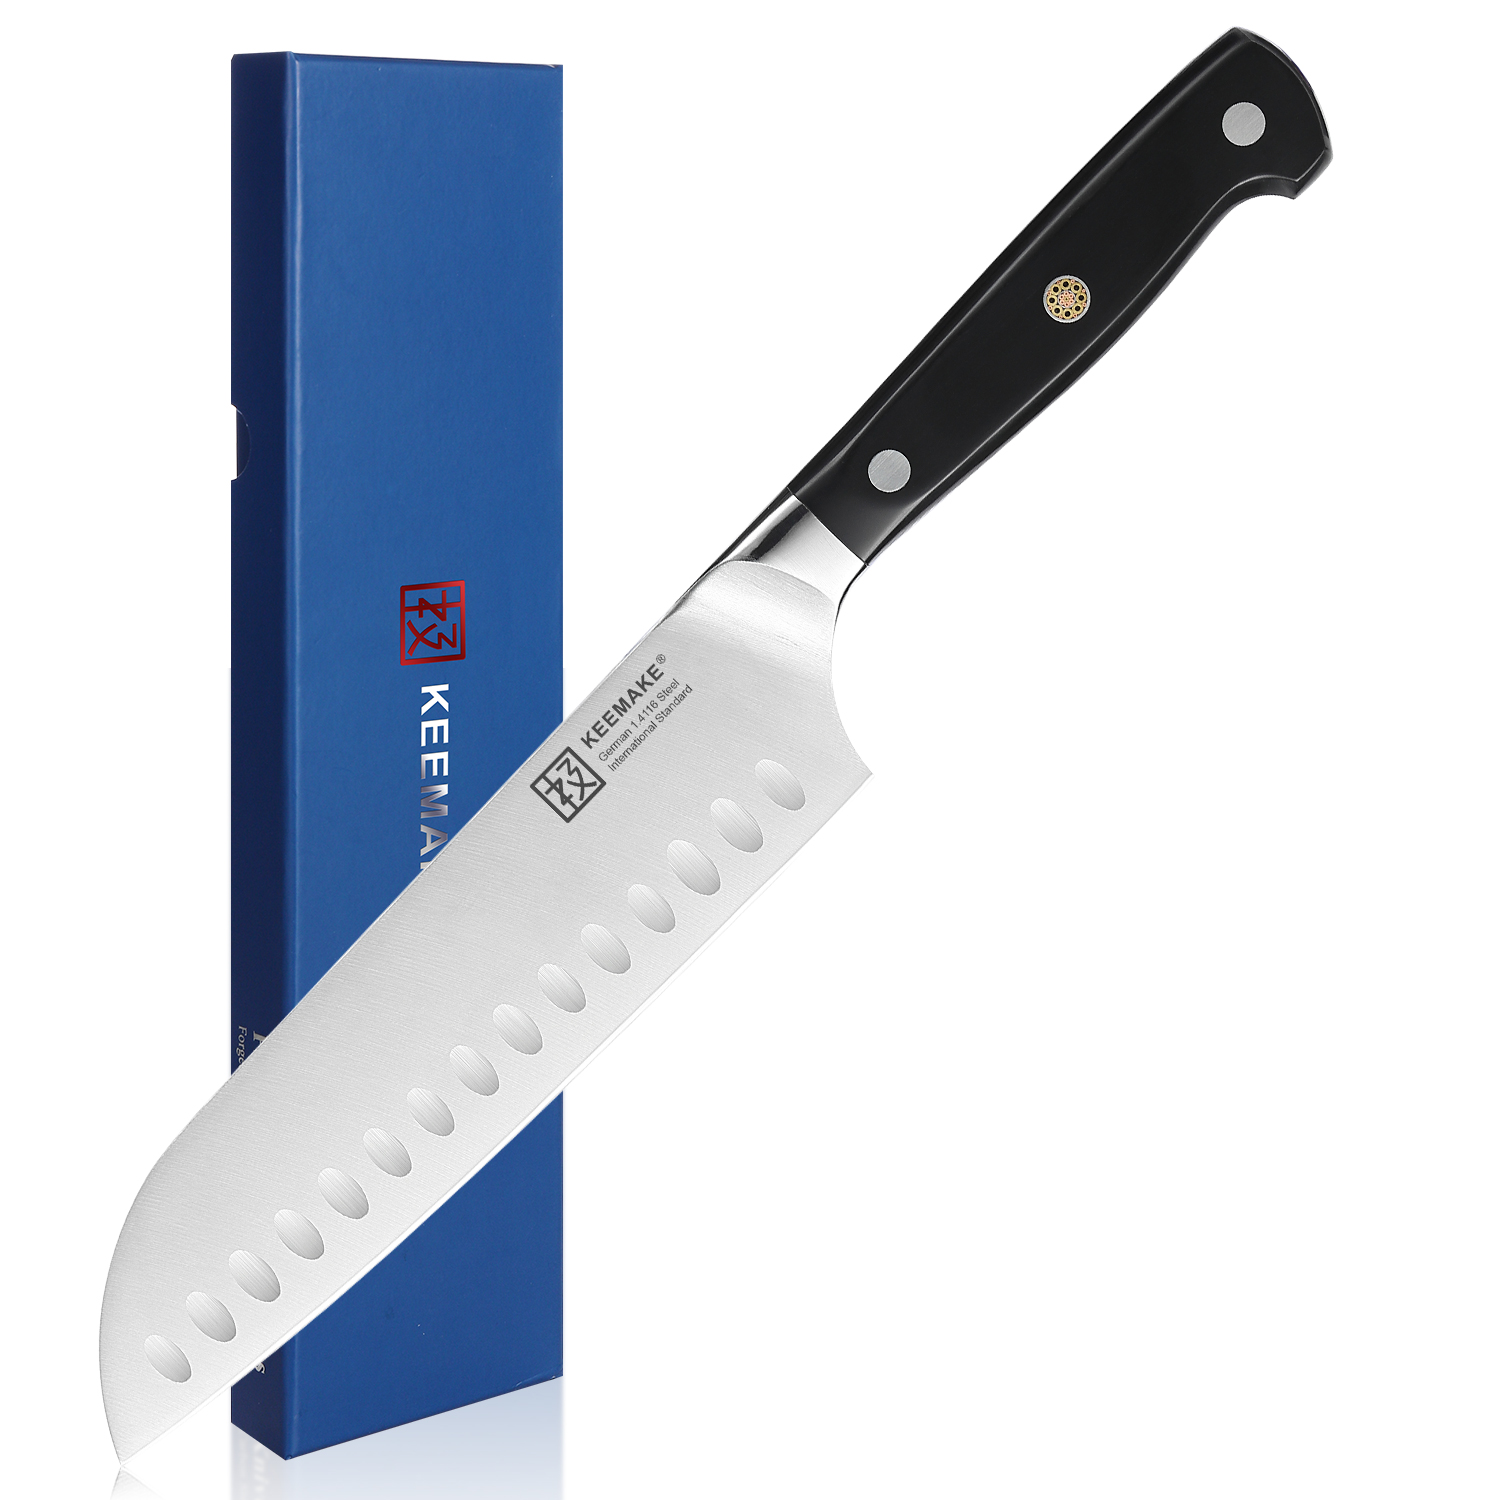 KEEMAKE Santoku Knife 7 inch, Japanese Chef Knife